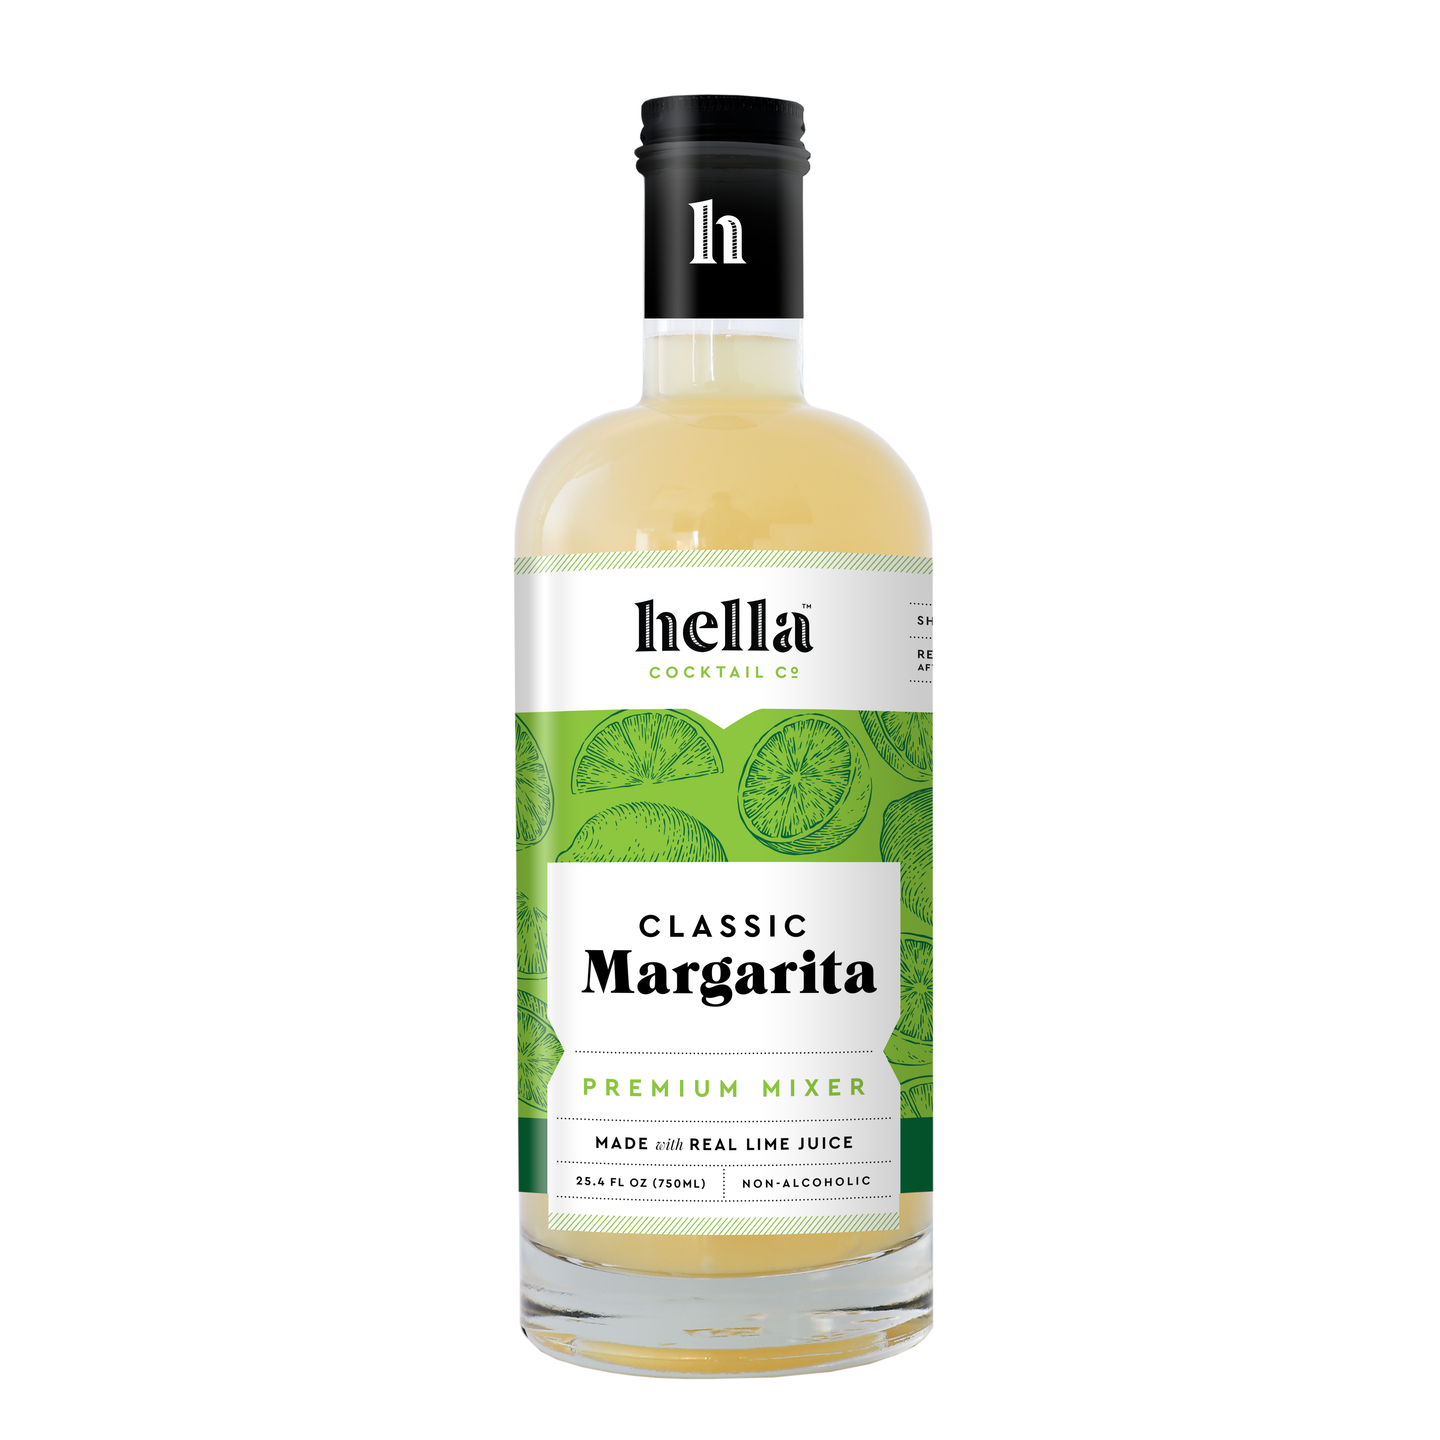 Hella Cocktail Co. - Cocktail Mixer: Margarita, 750 ml (Certified Non-GMO)